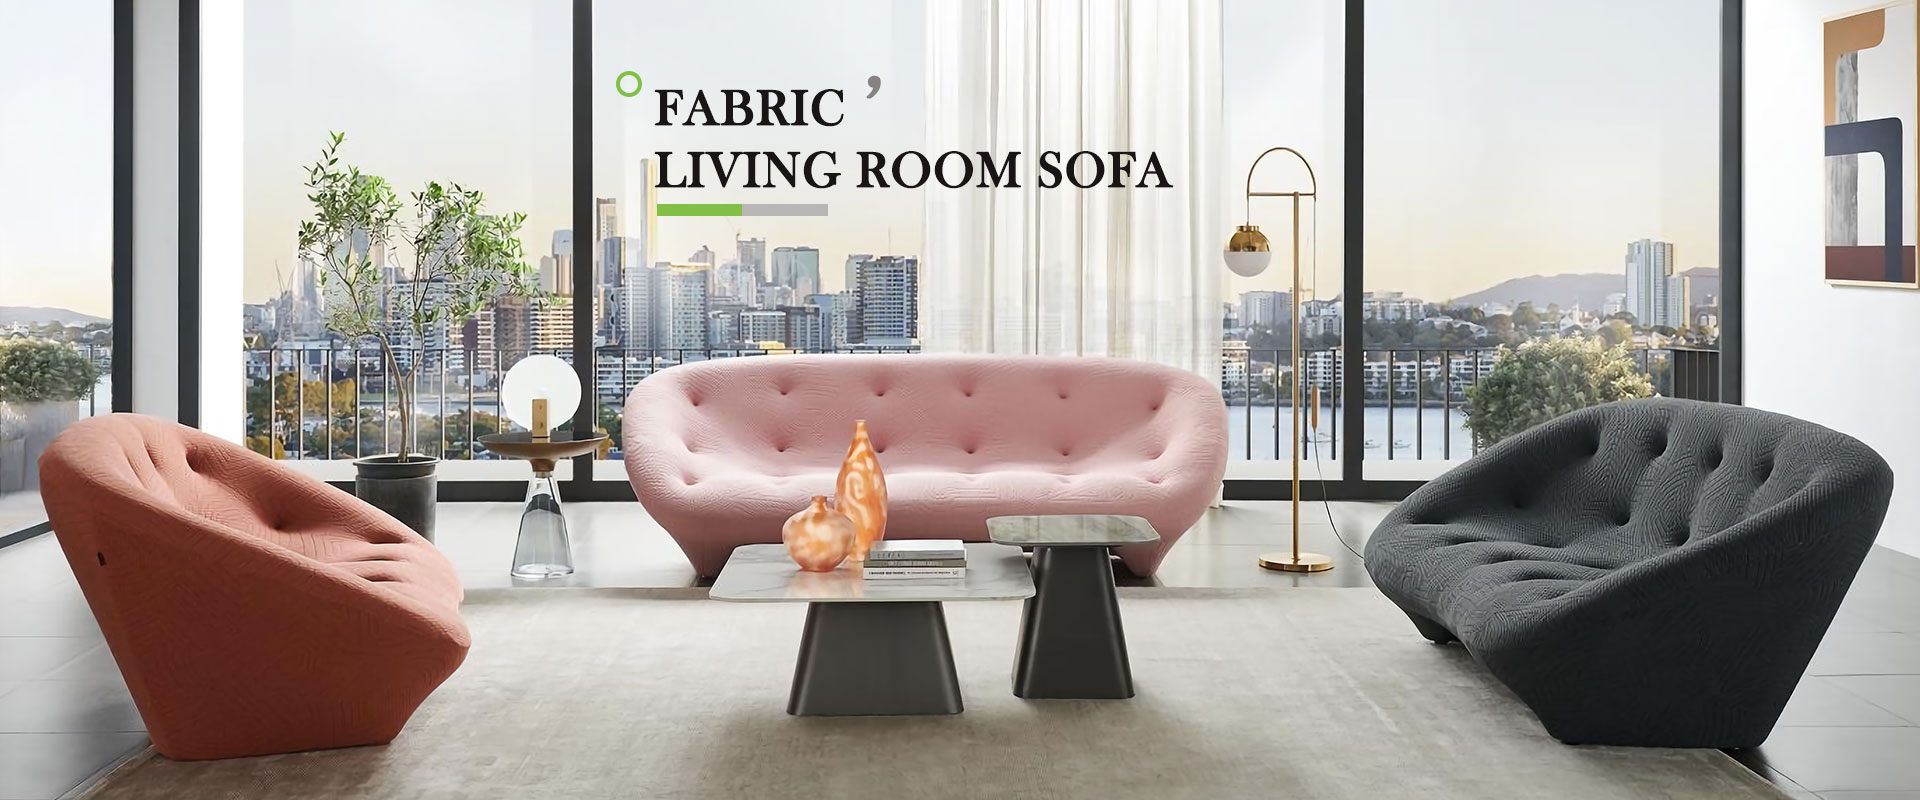 Kina Fabric Living Room Sofa Factory